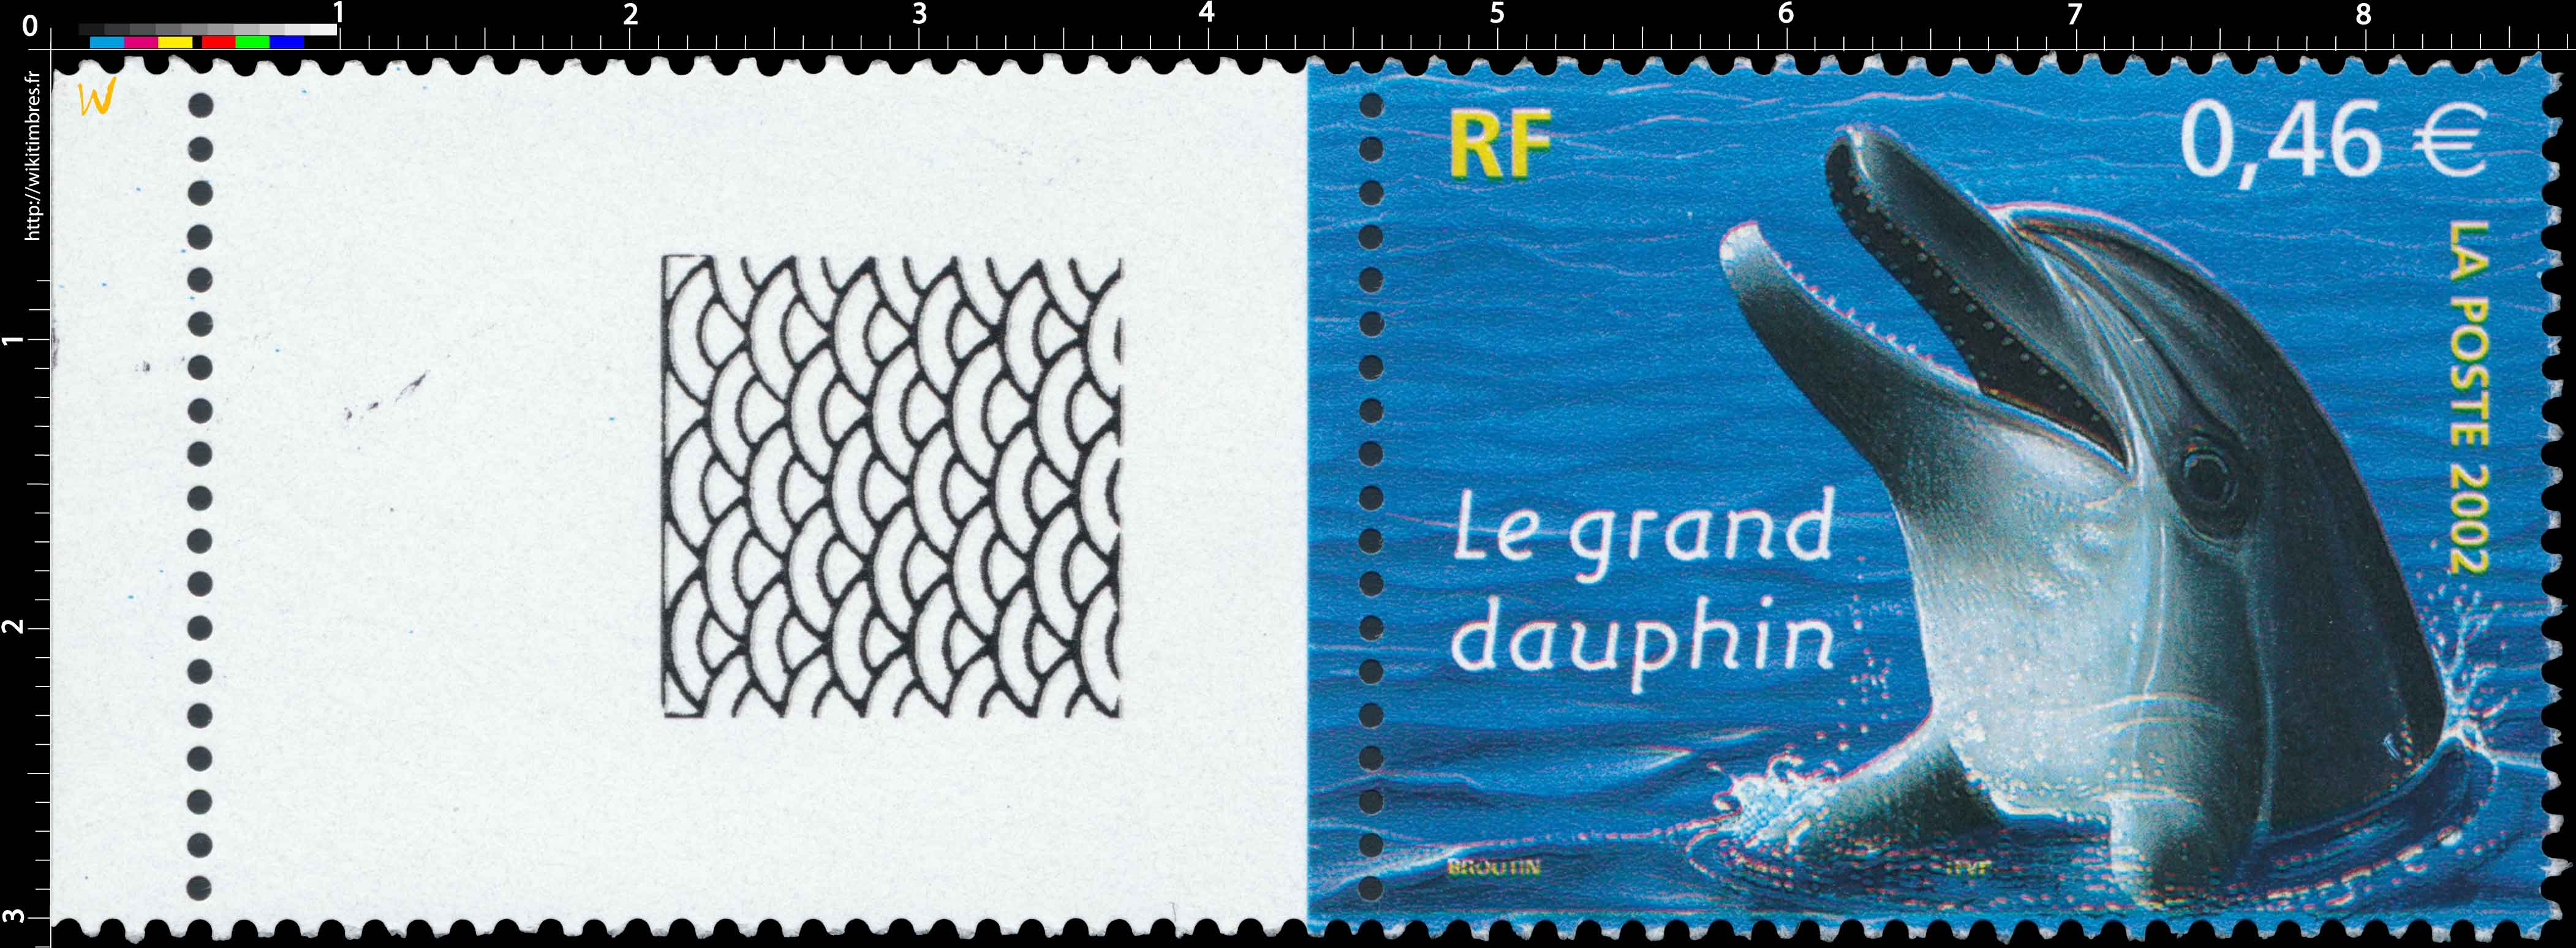 2002 Le grand dauphin